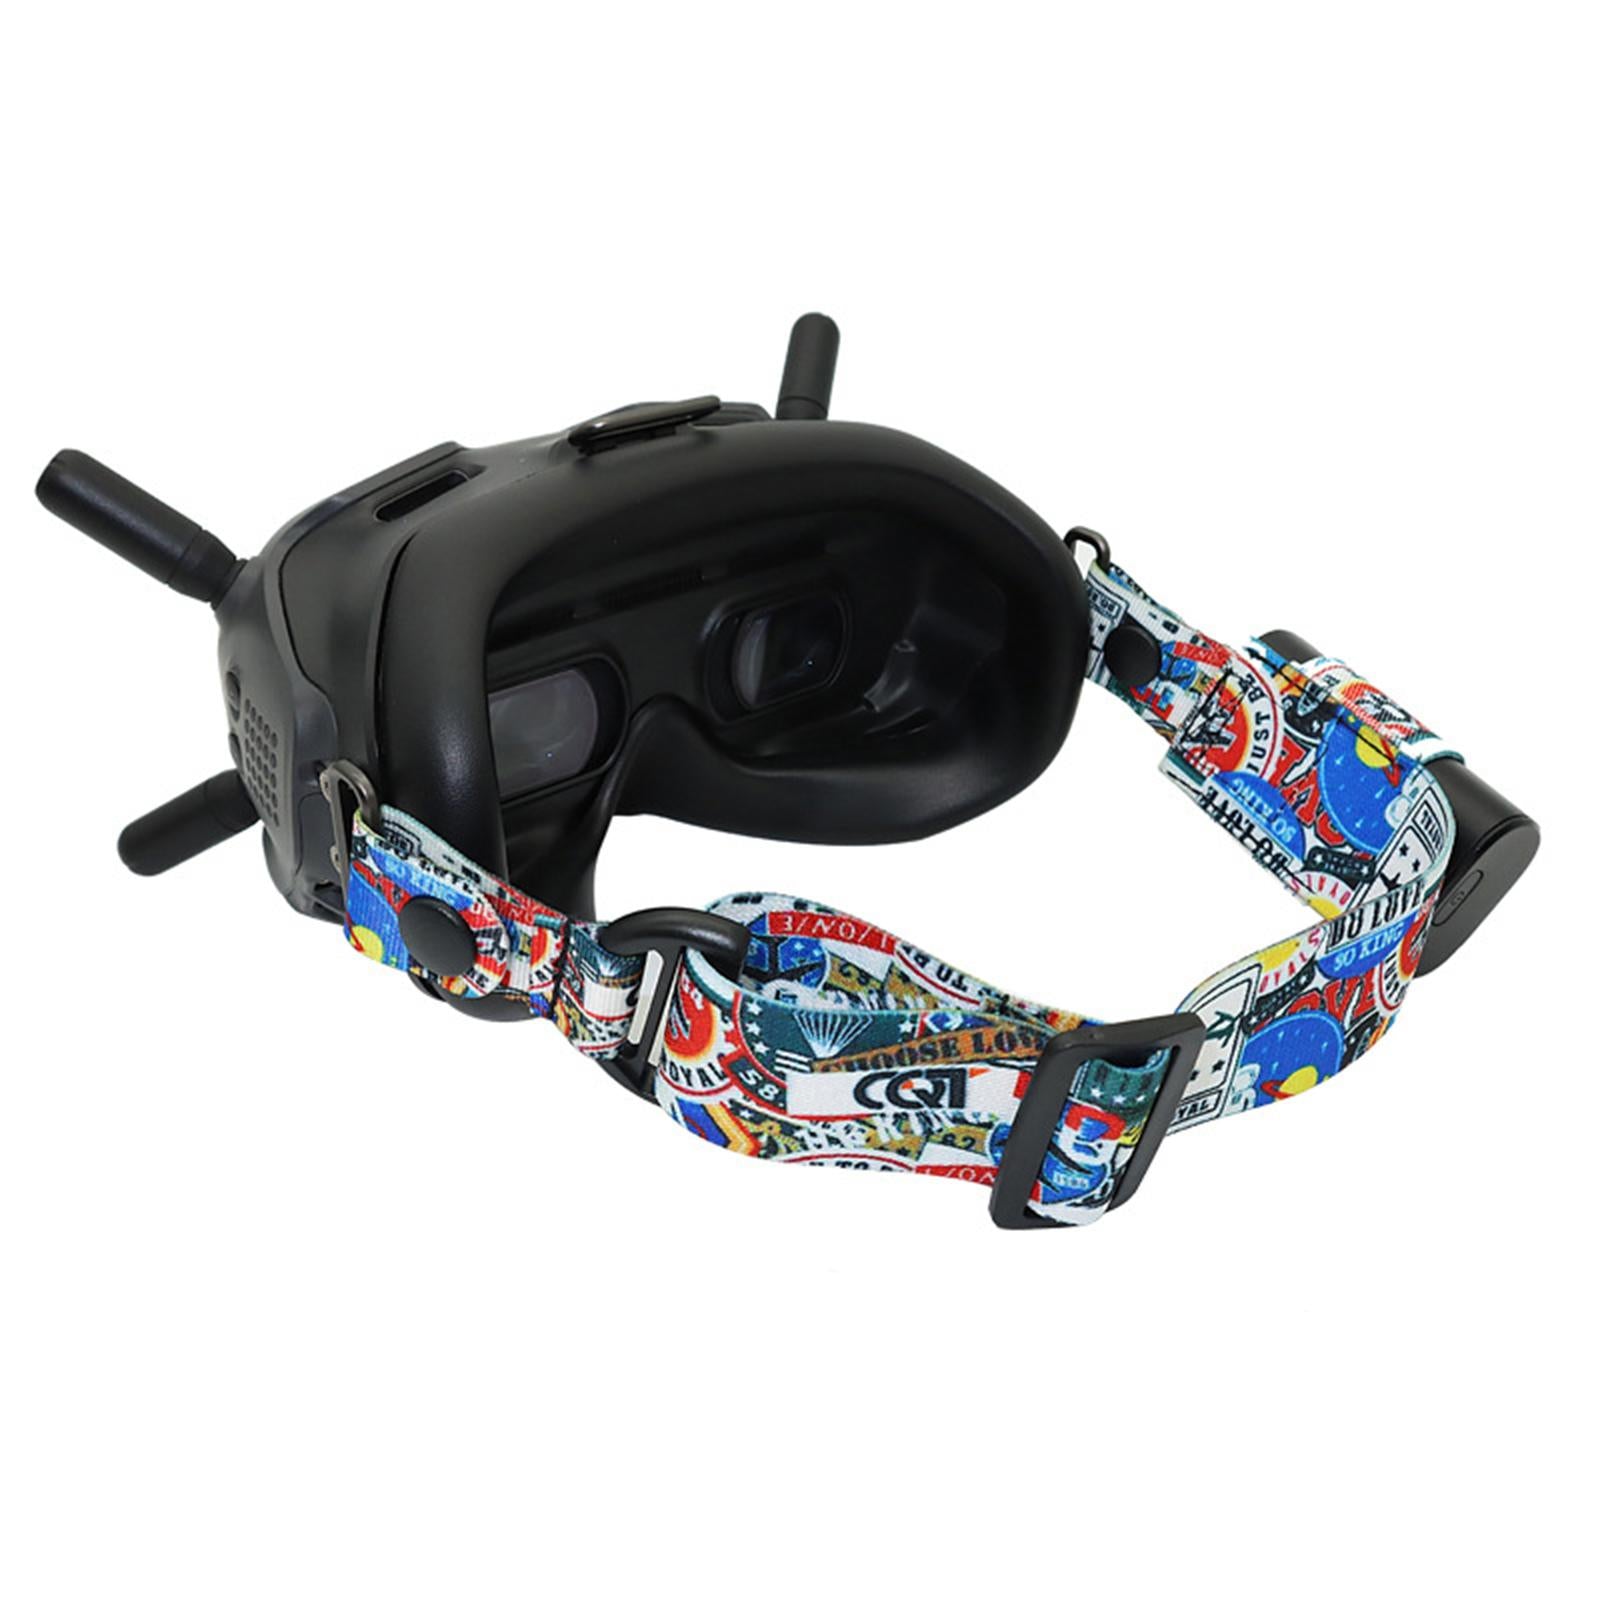 Head Strap for DJI FPV Glasses V2 Headband Personalized Protection Pad 1x Headband